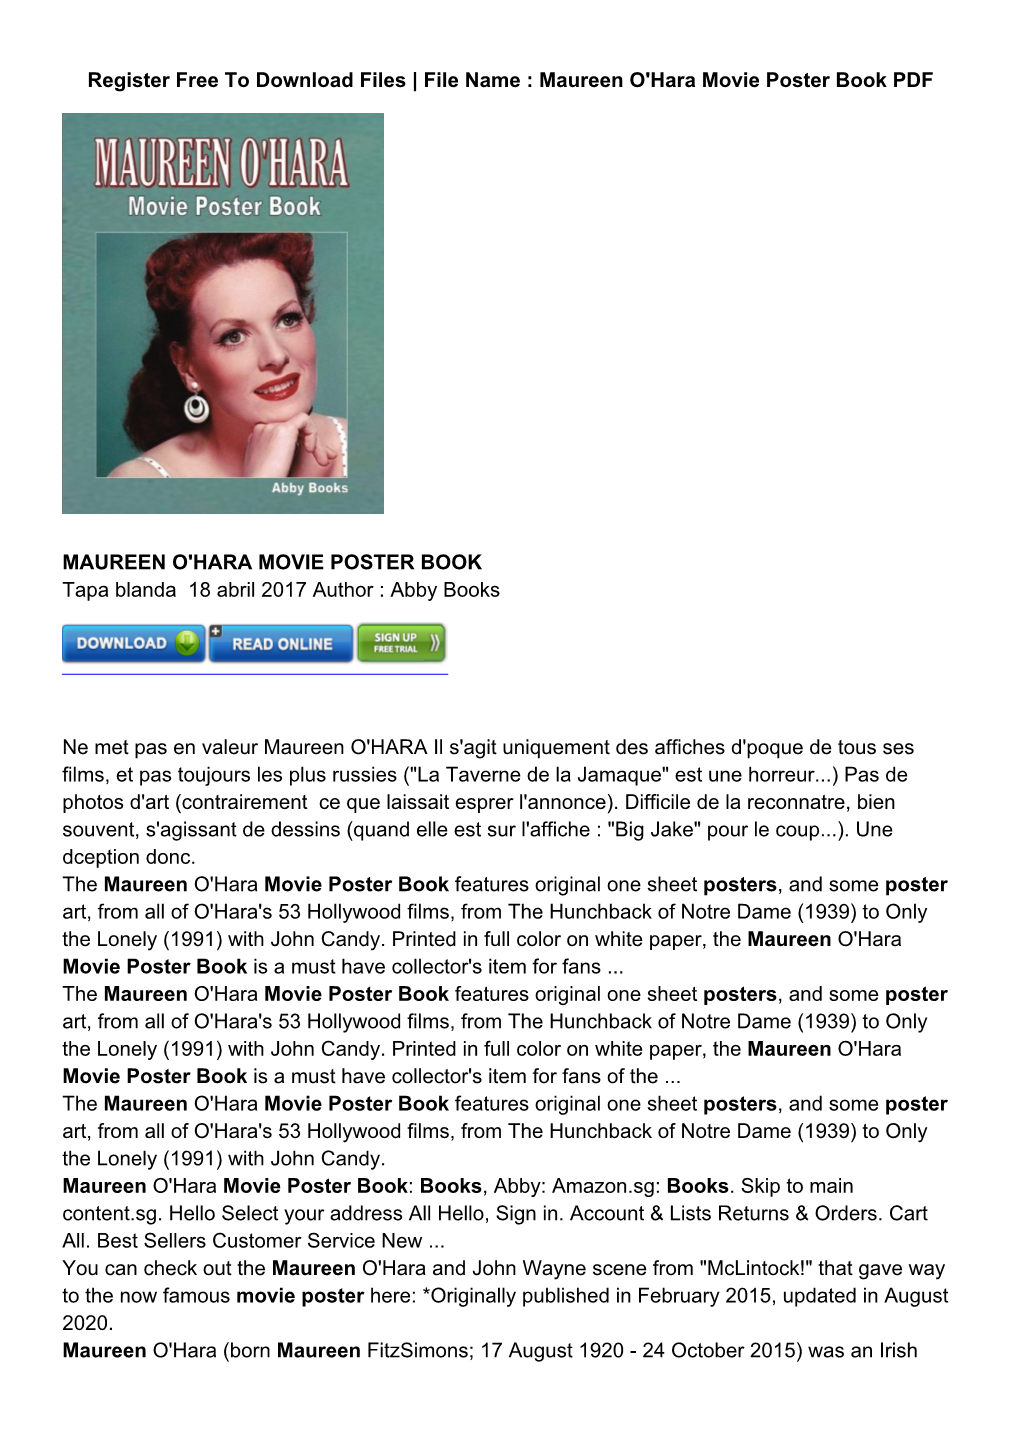 [PDF] Free Maureen O'hara Movie Poster Book